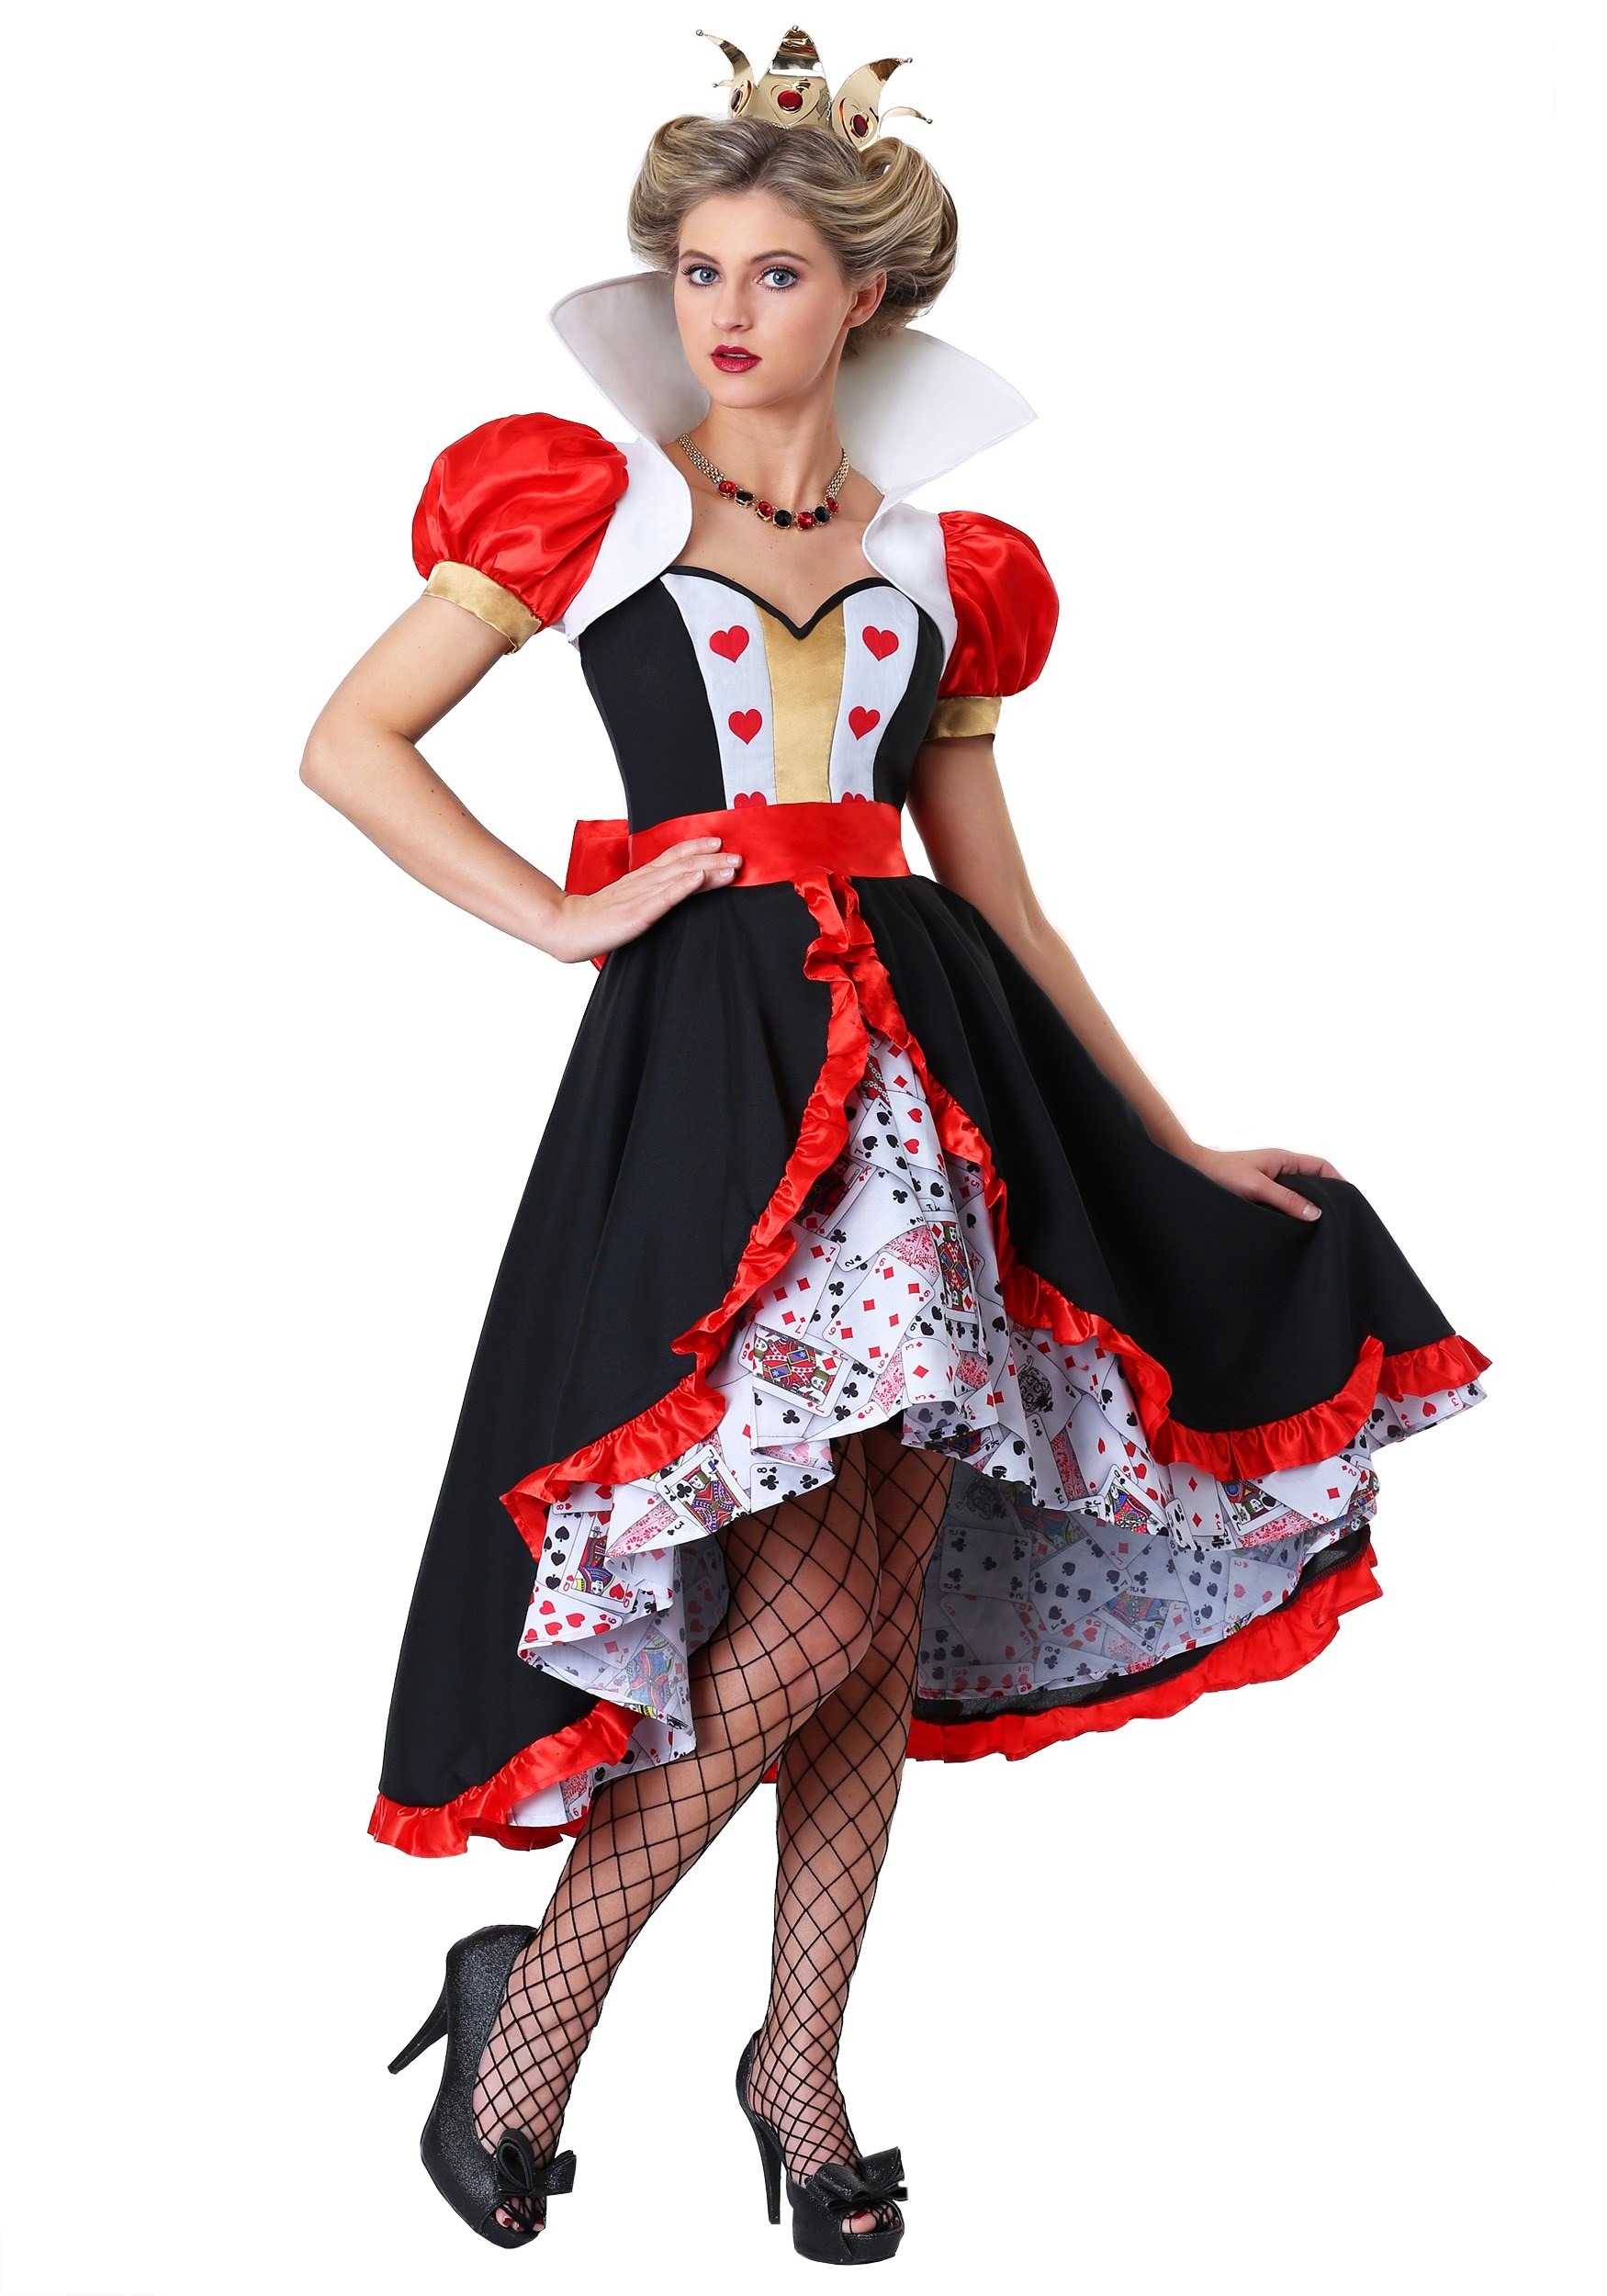 Fun Costumes Queen of Hearts Makeup Kit